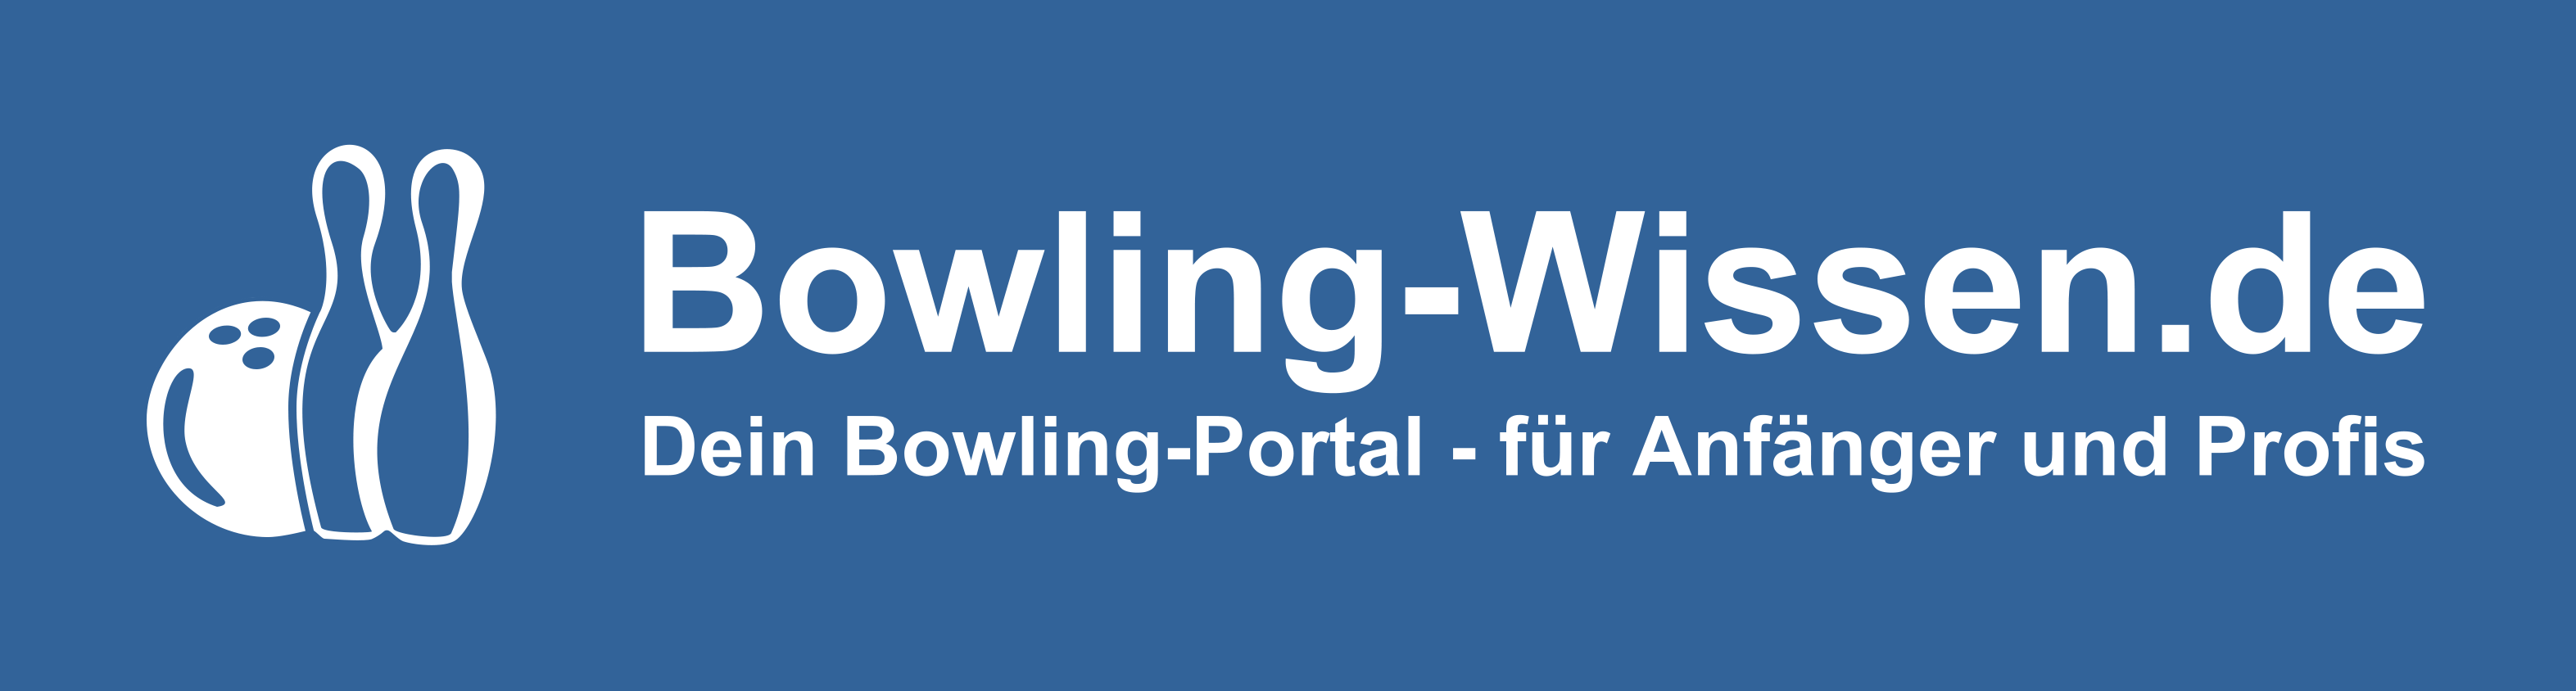 Bowling-Wissen.de